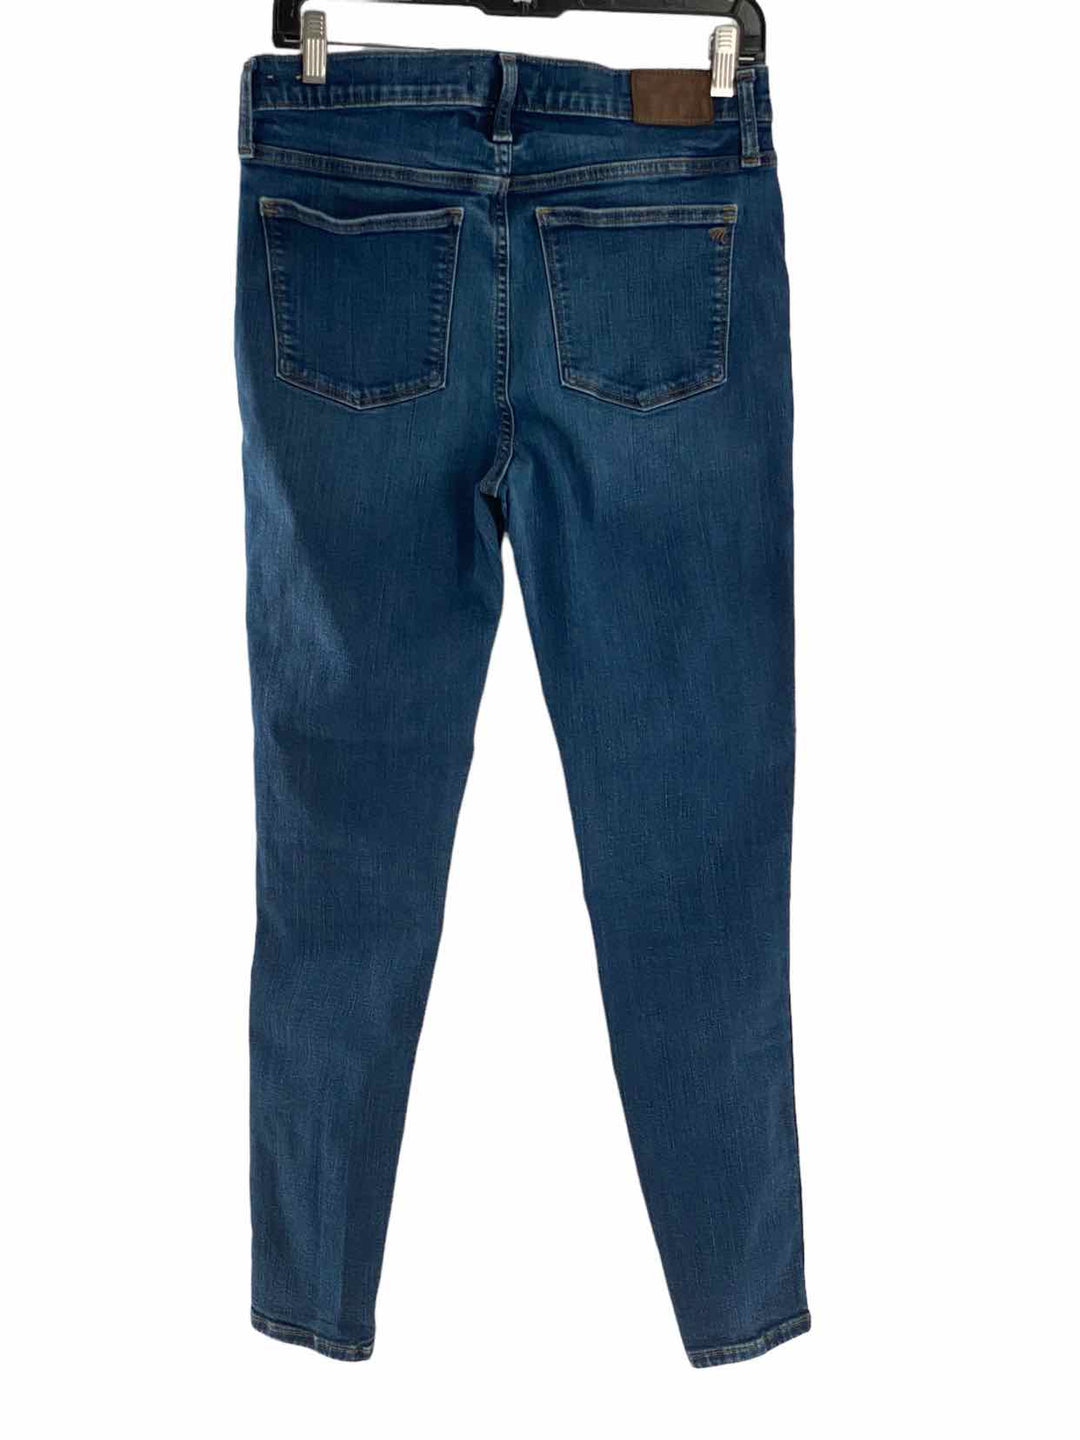 MadeWell Size 6 Medium wash Jeans